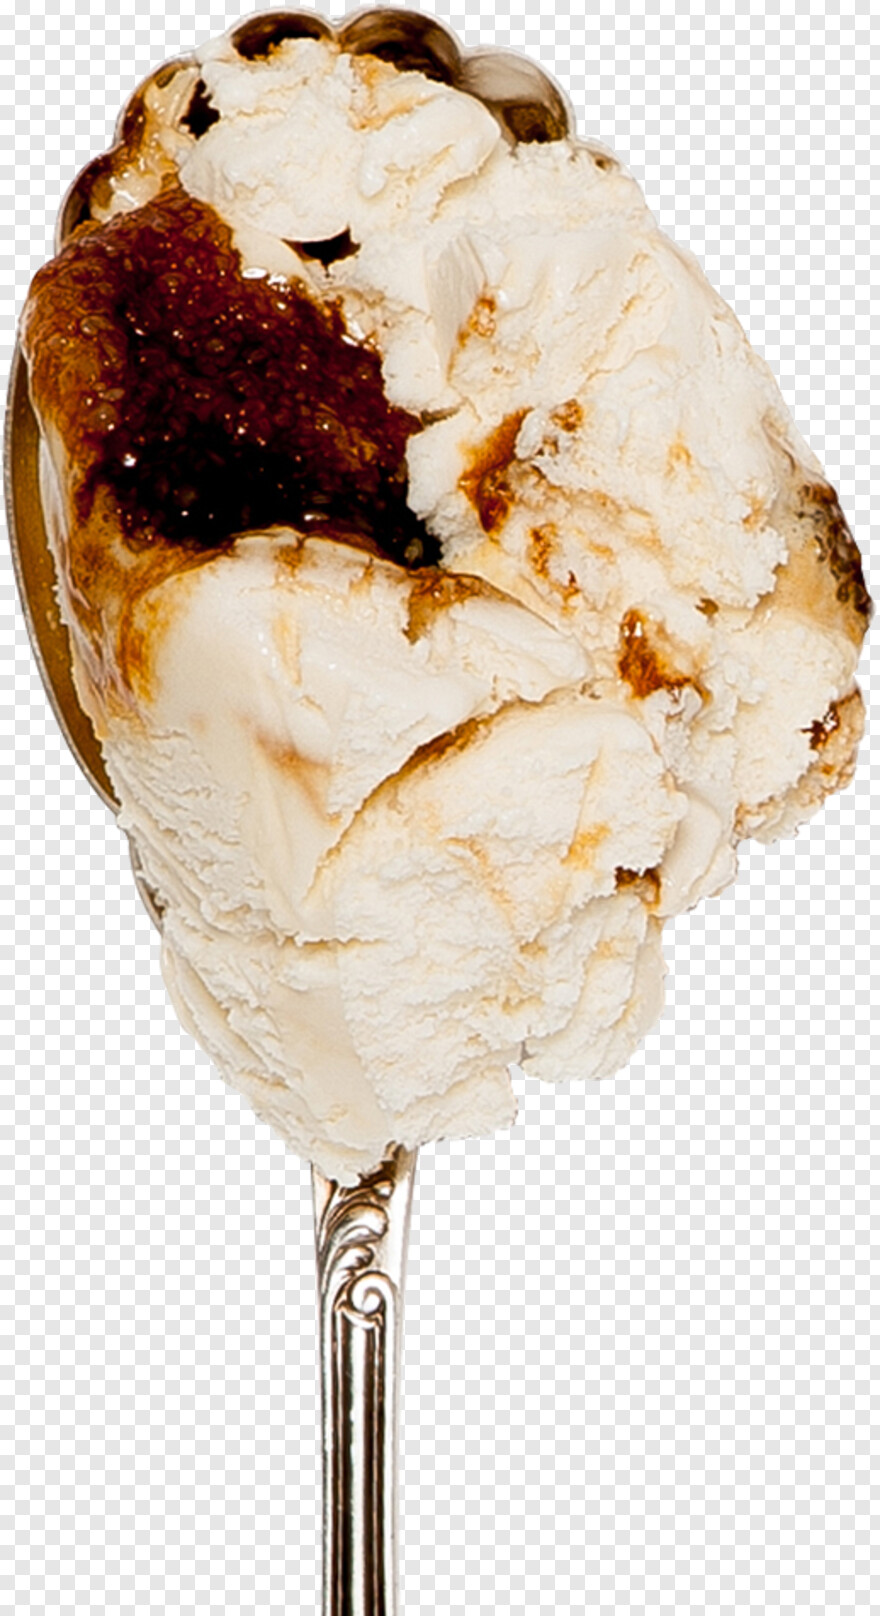 ice-cream # 946640